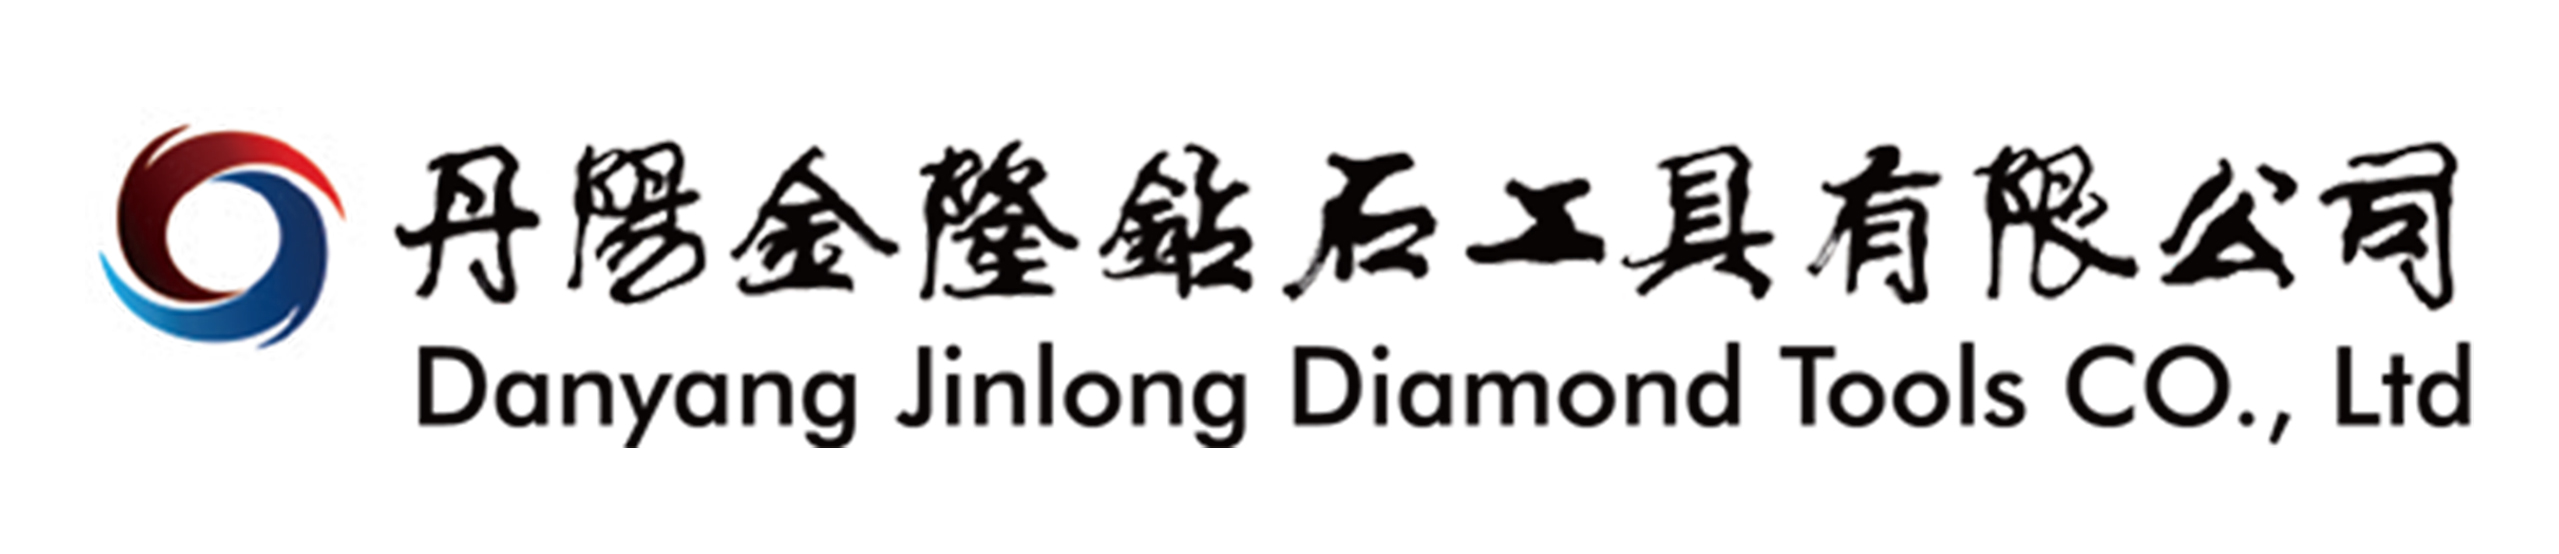 danyang jinlong diamond tools co.,ltd